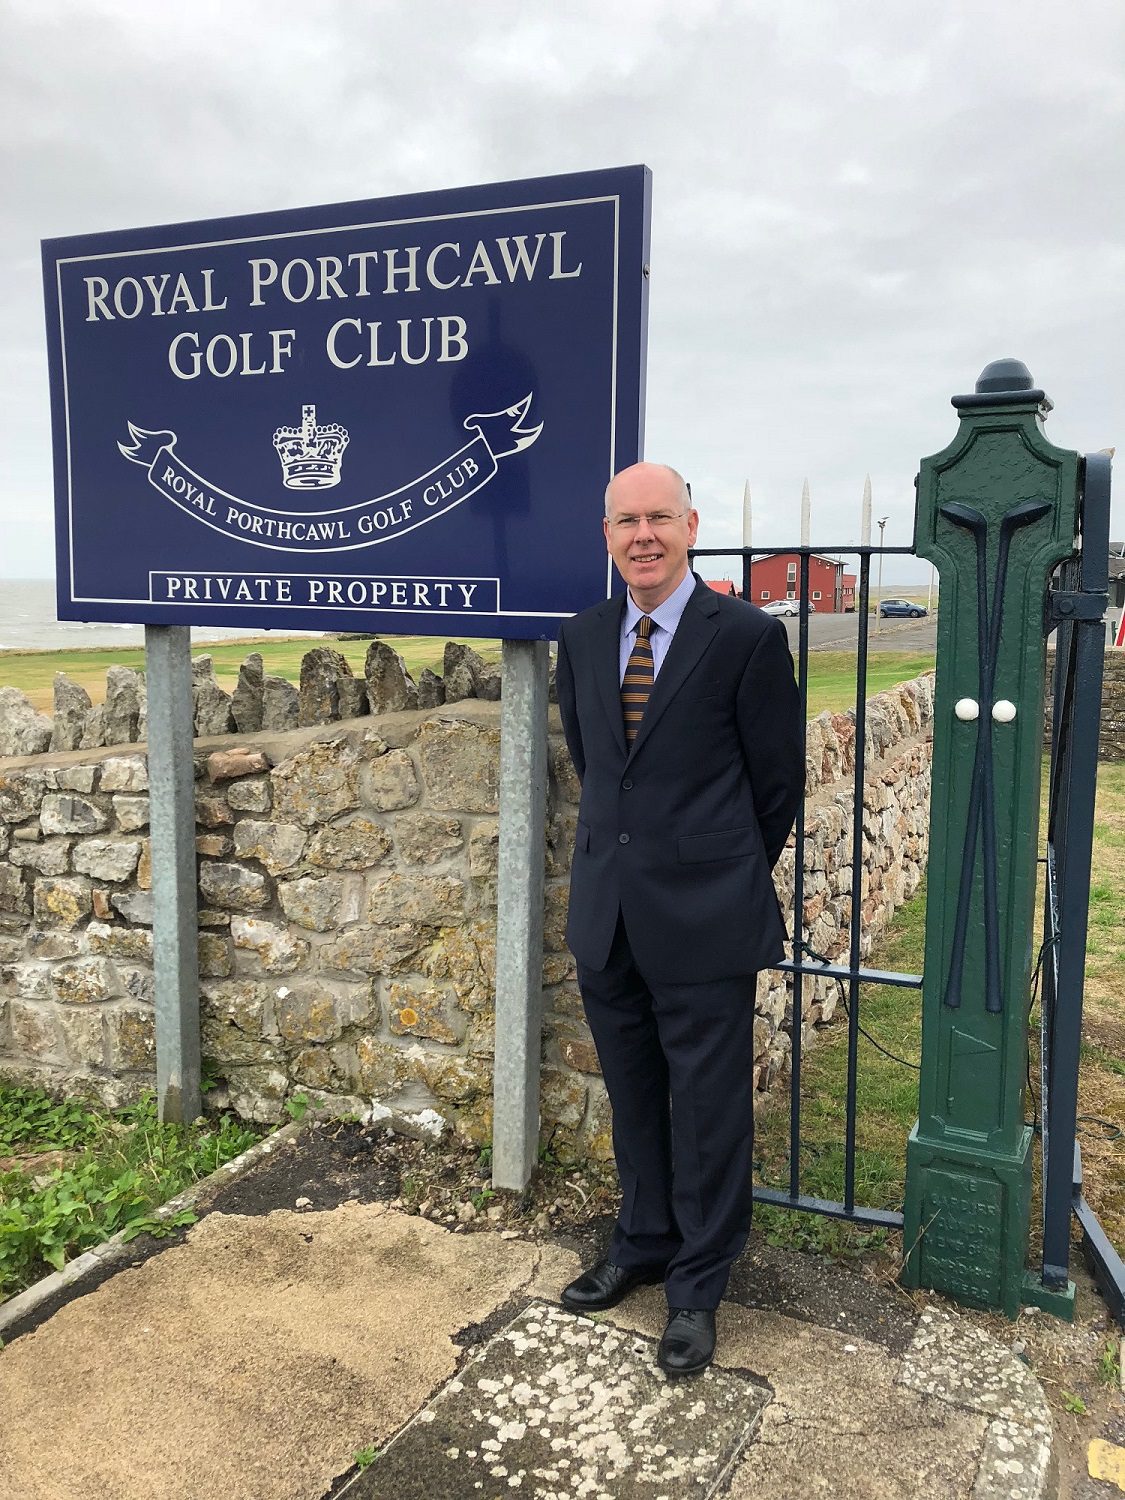 Pictured - Graeme Pryde at Royal Porthcawl Golf Club